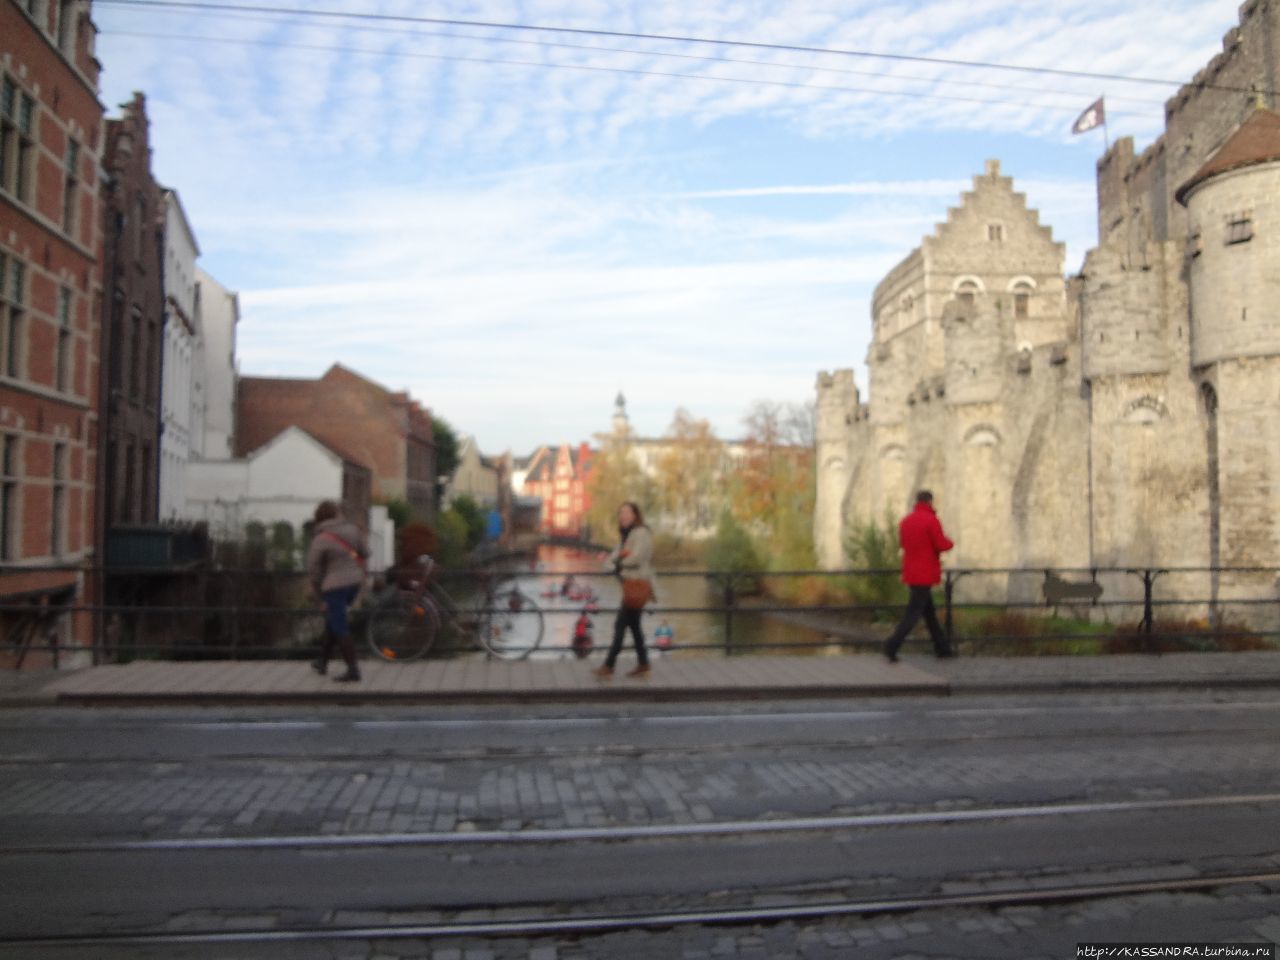 История Фландрии. Замок Гравенстен в Генте Гент, Бельгия